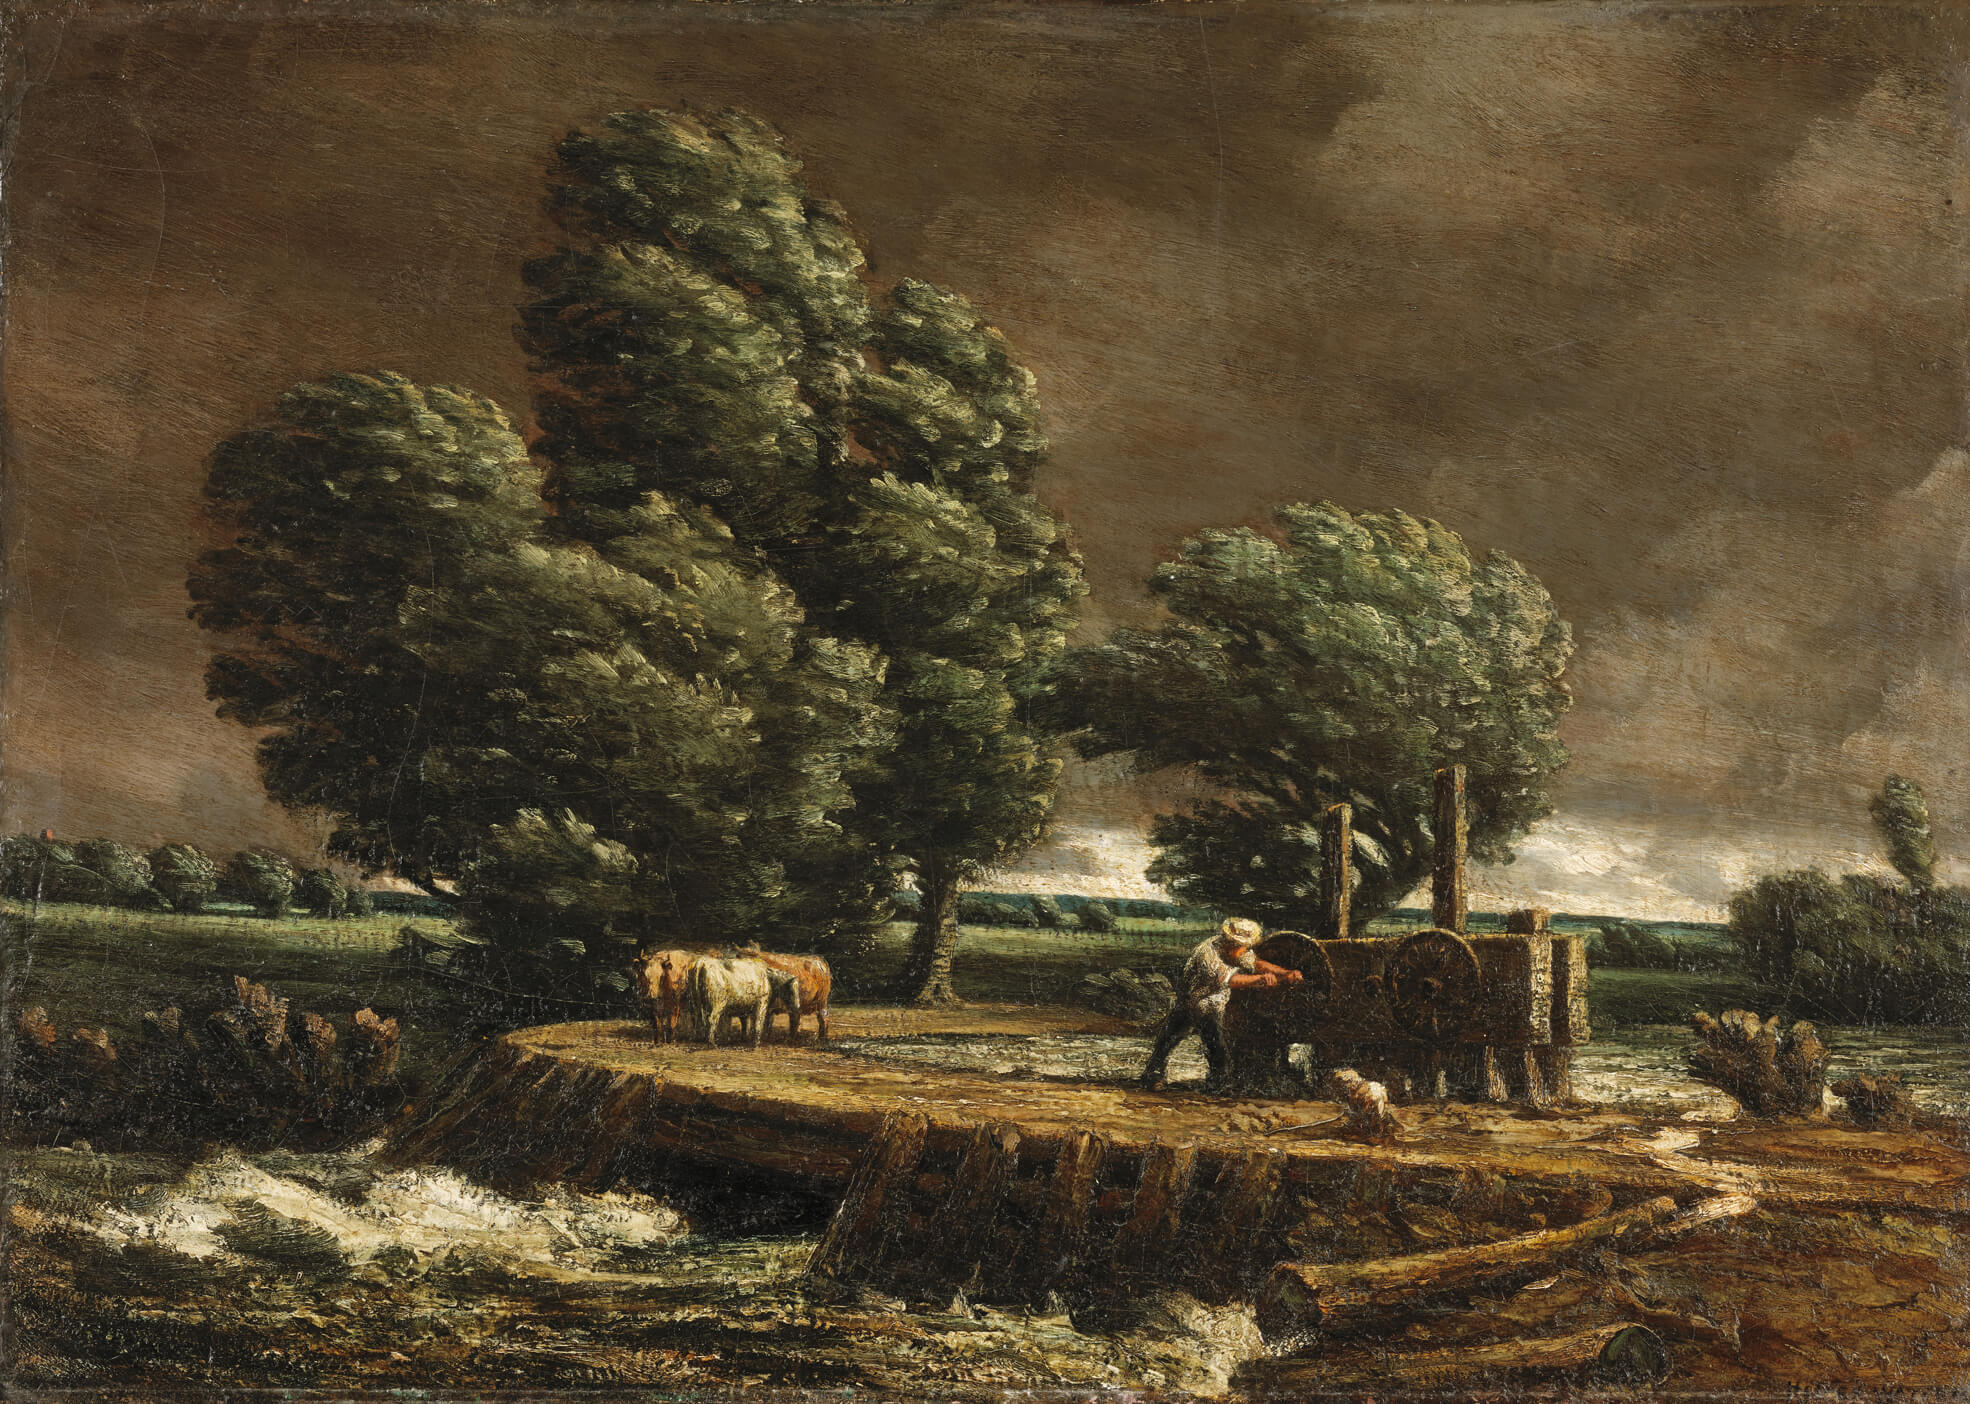 Homer Watson, The Flood Gate, c.1900–1